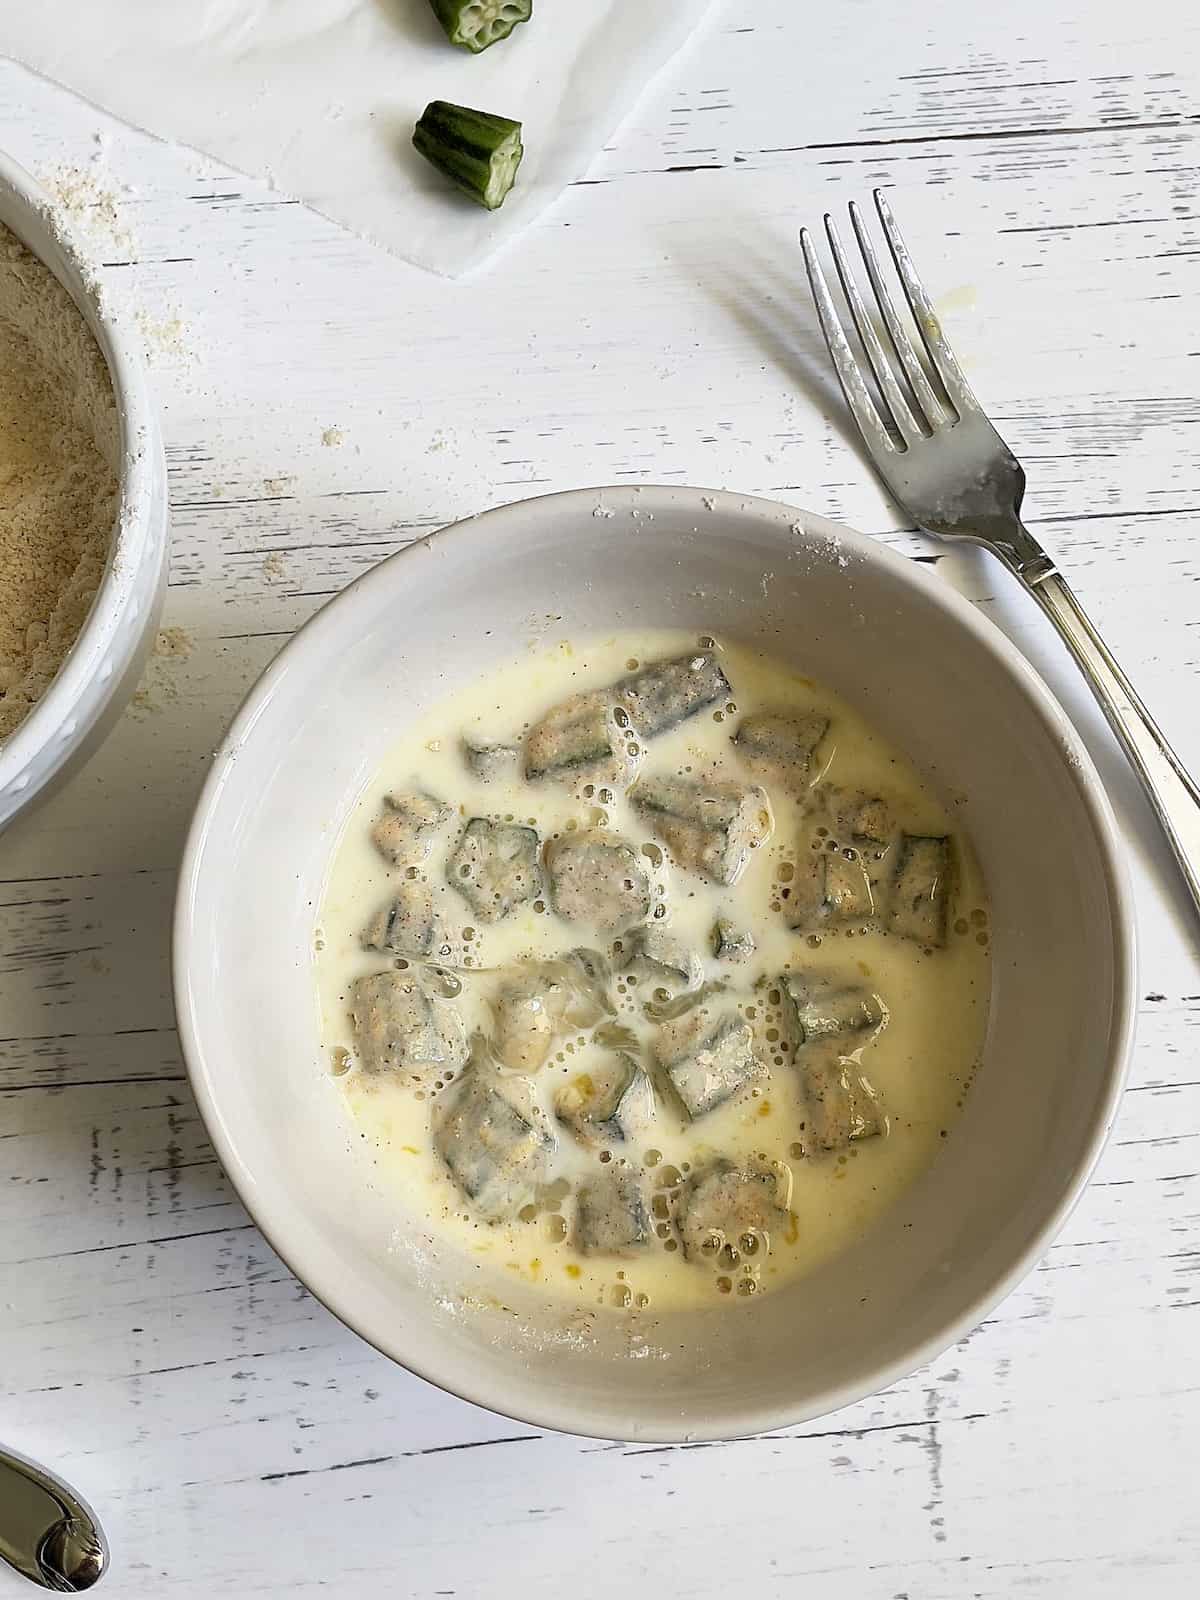 okra in a bowl of buttermilk